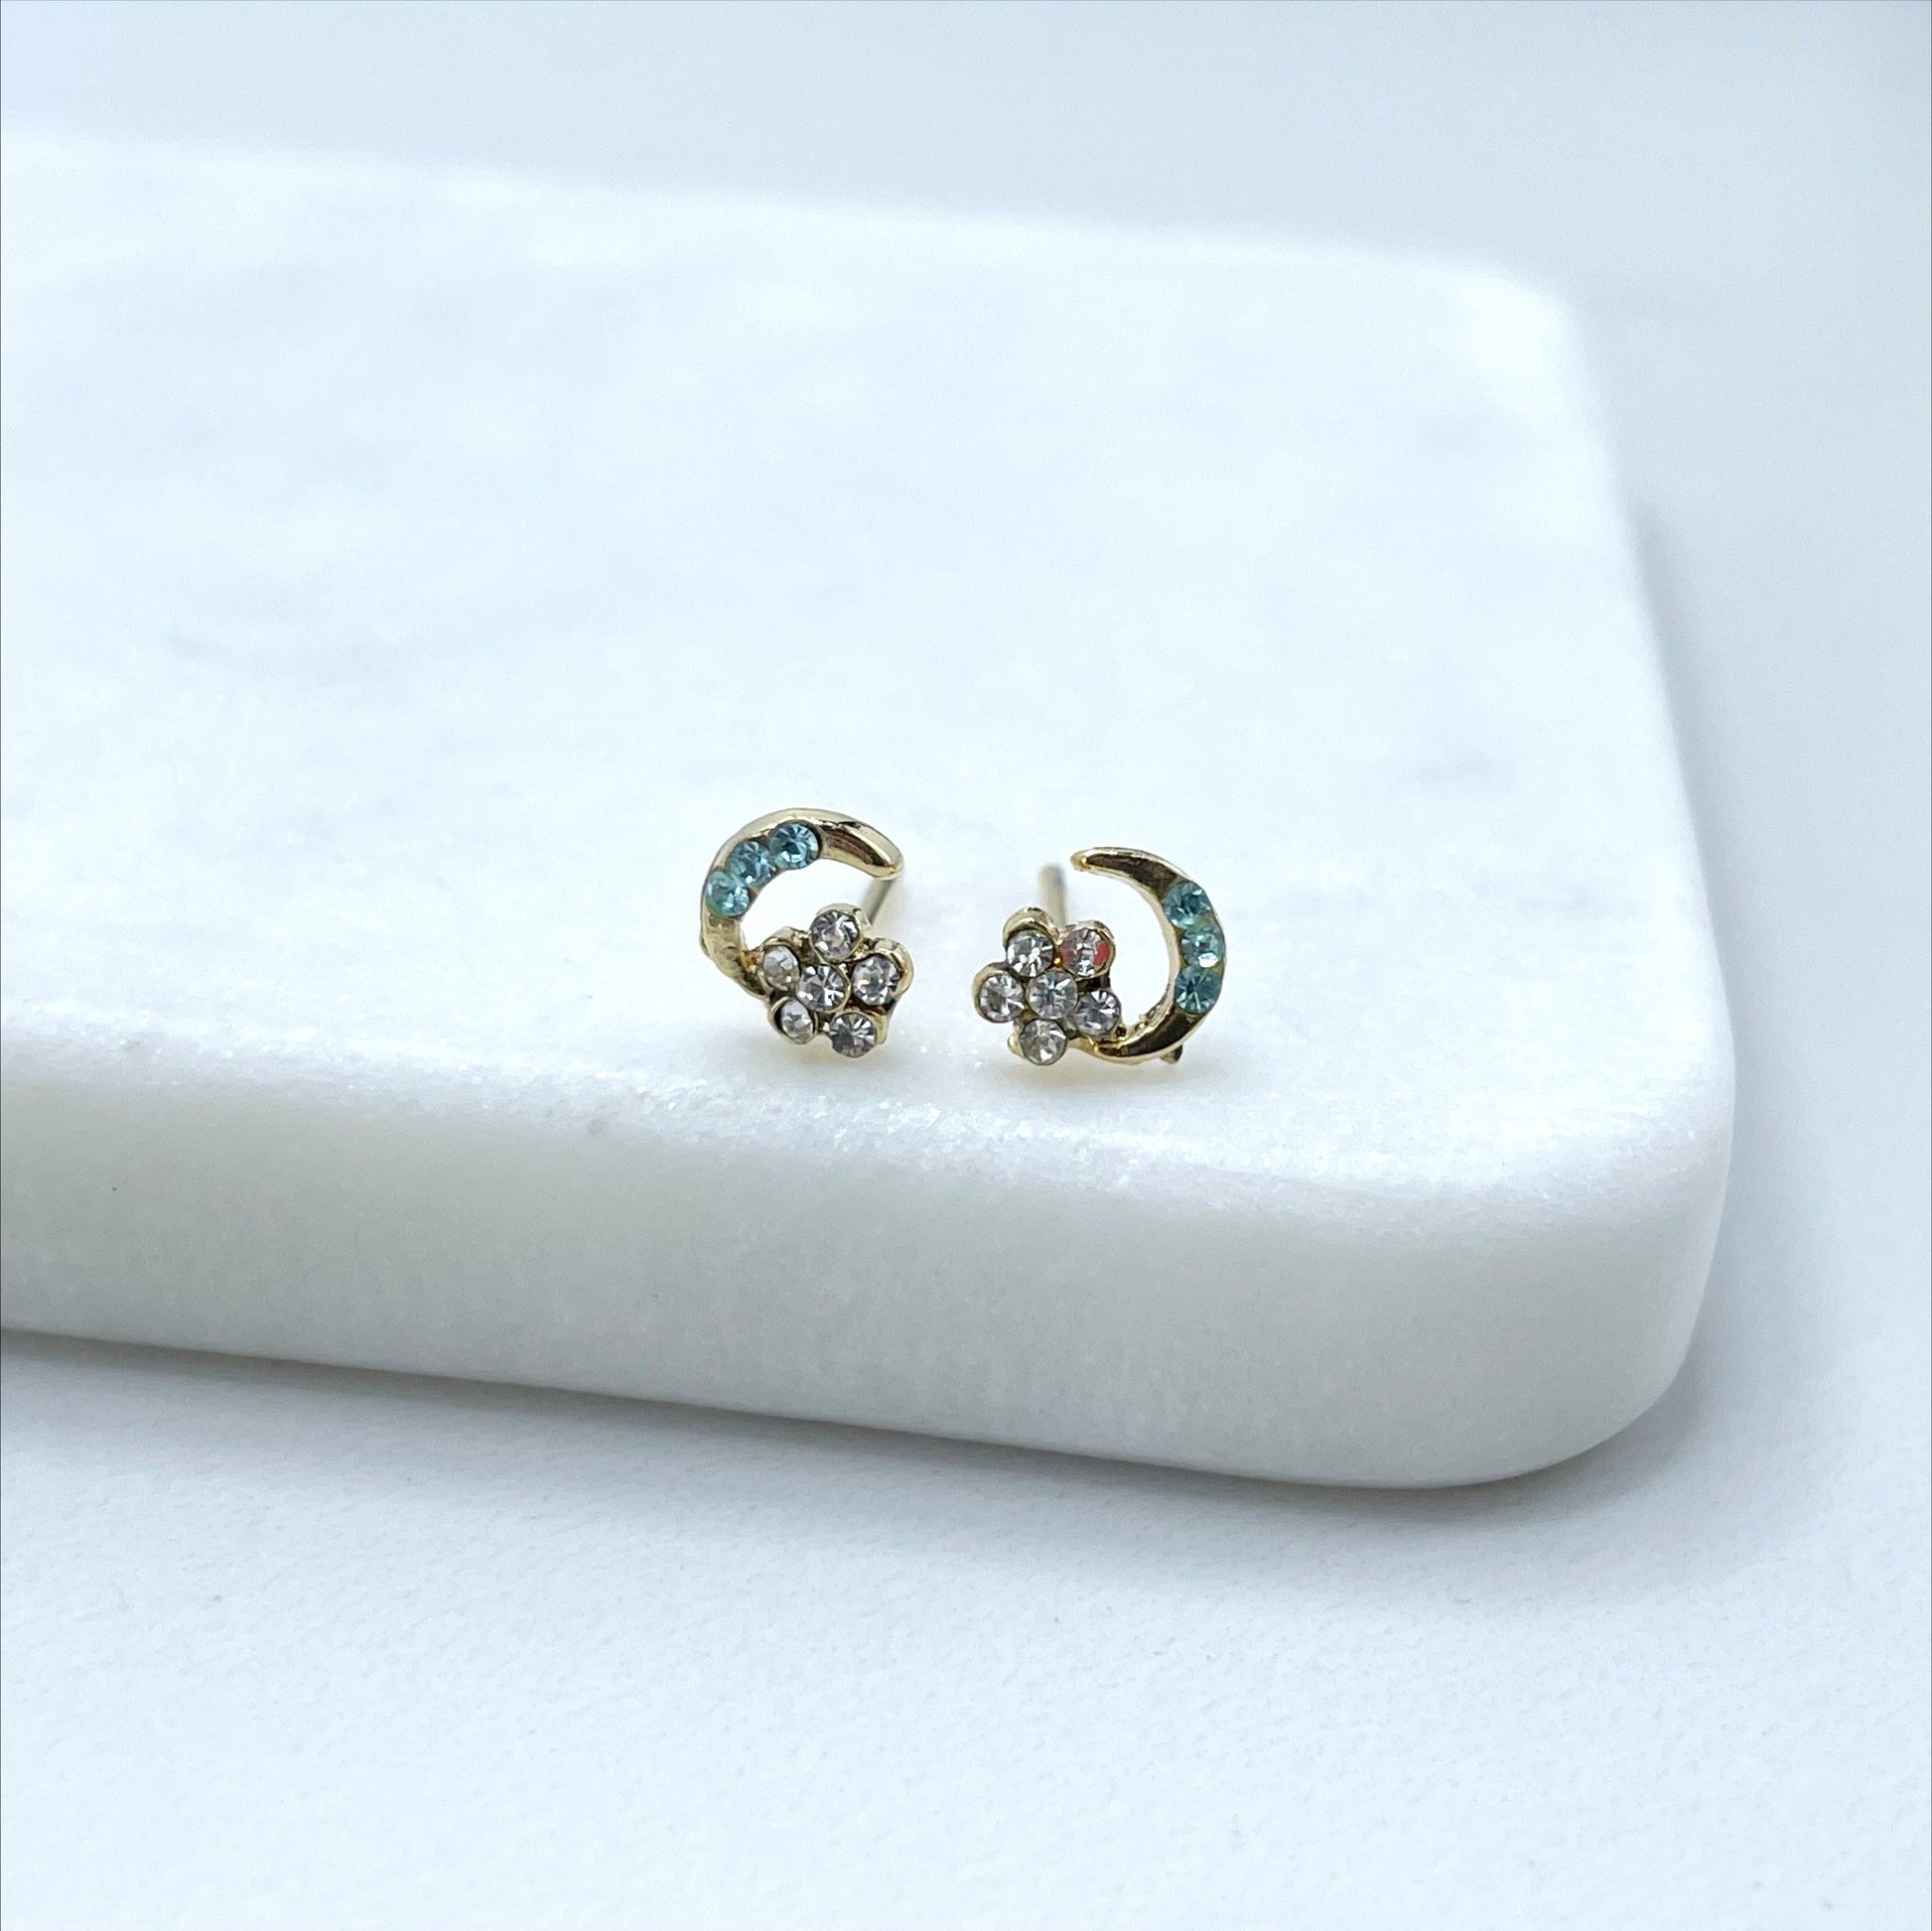 18k Gold Filled Cubic Zirconia Moon & Flower Earrings Wholesale Jewelry Making Supplies